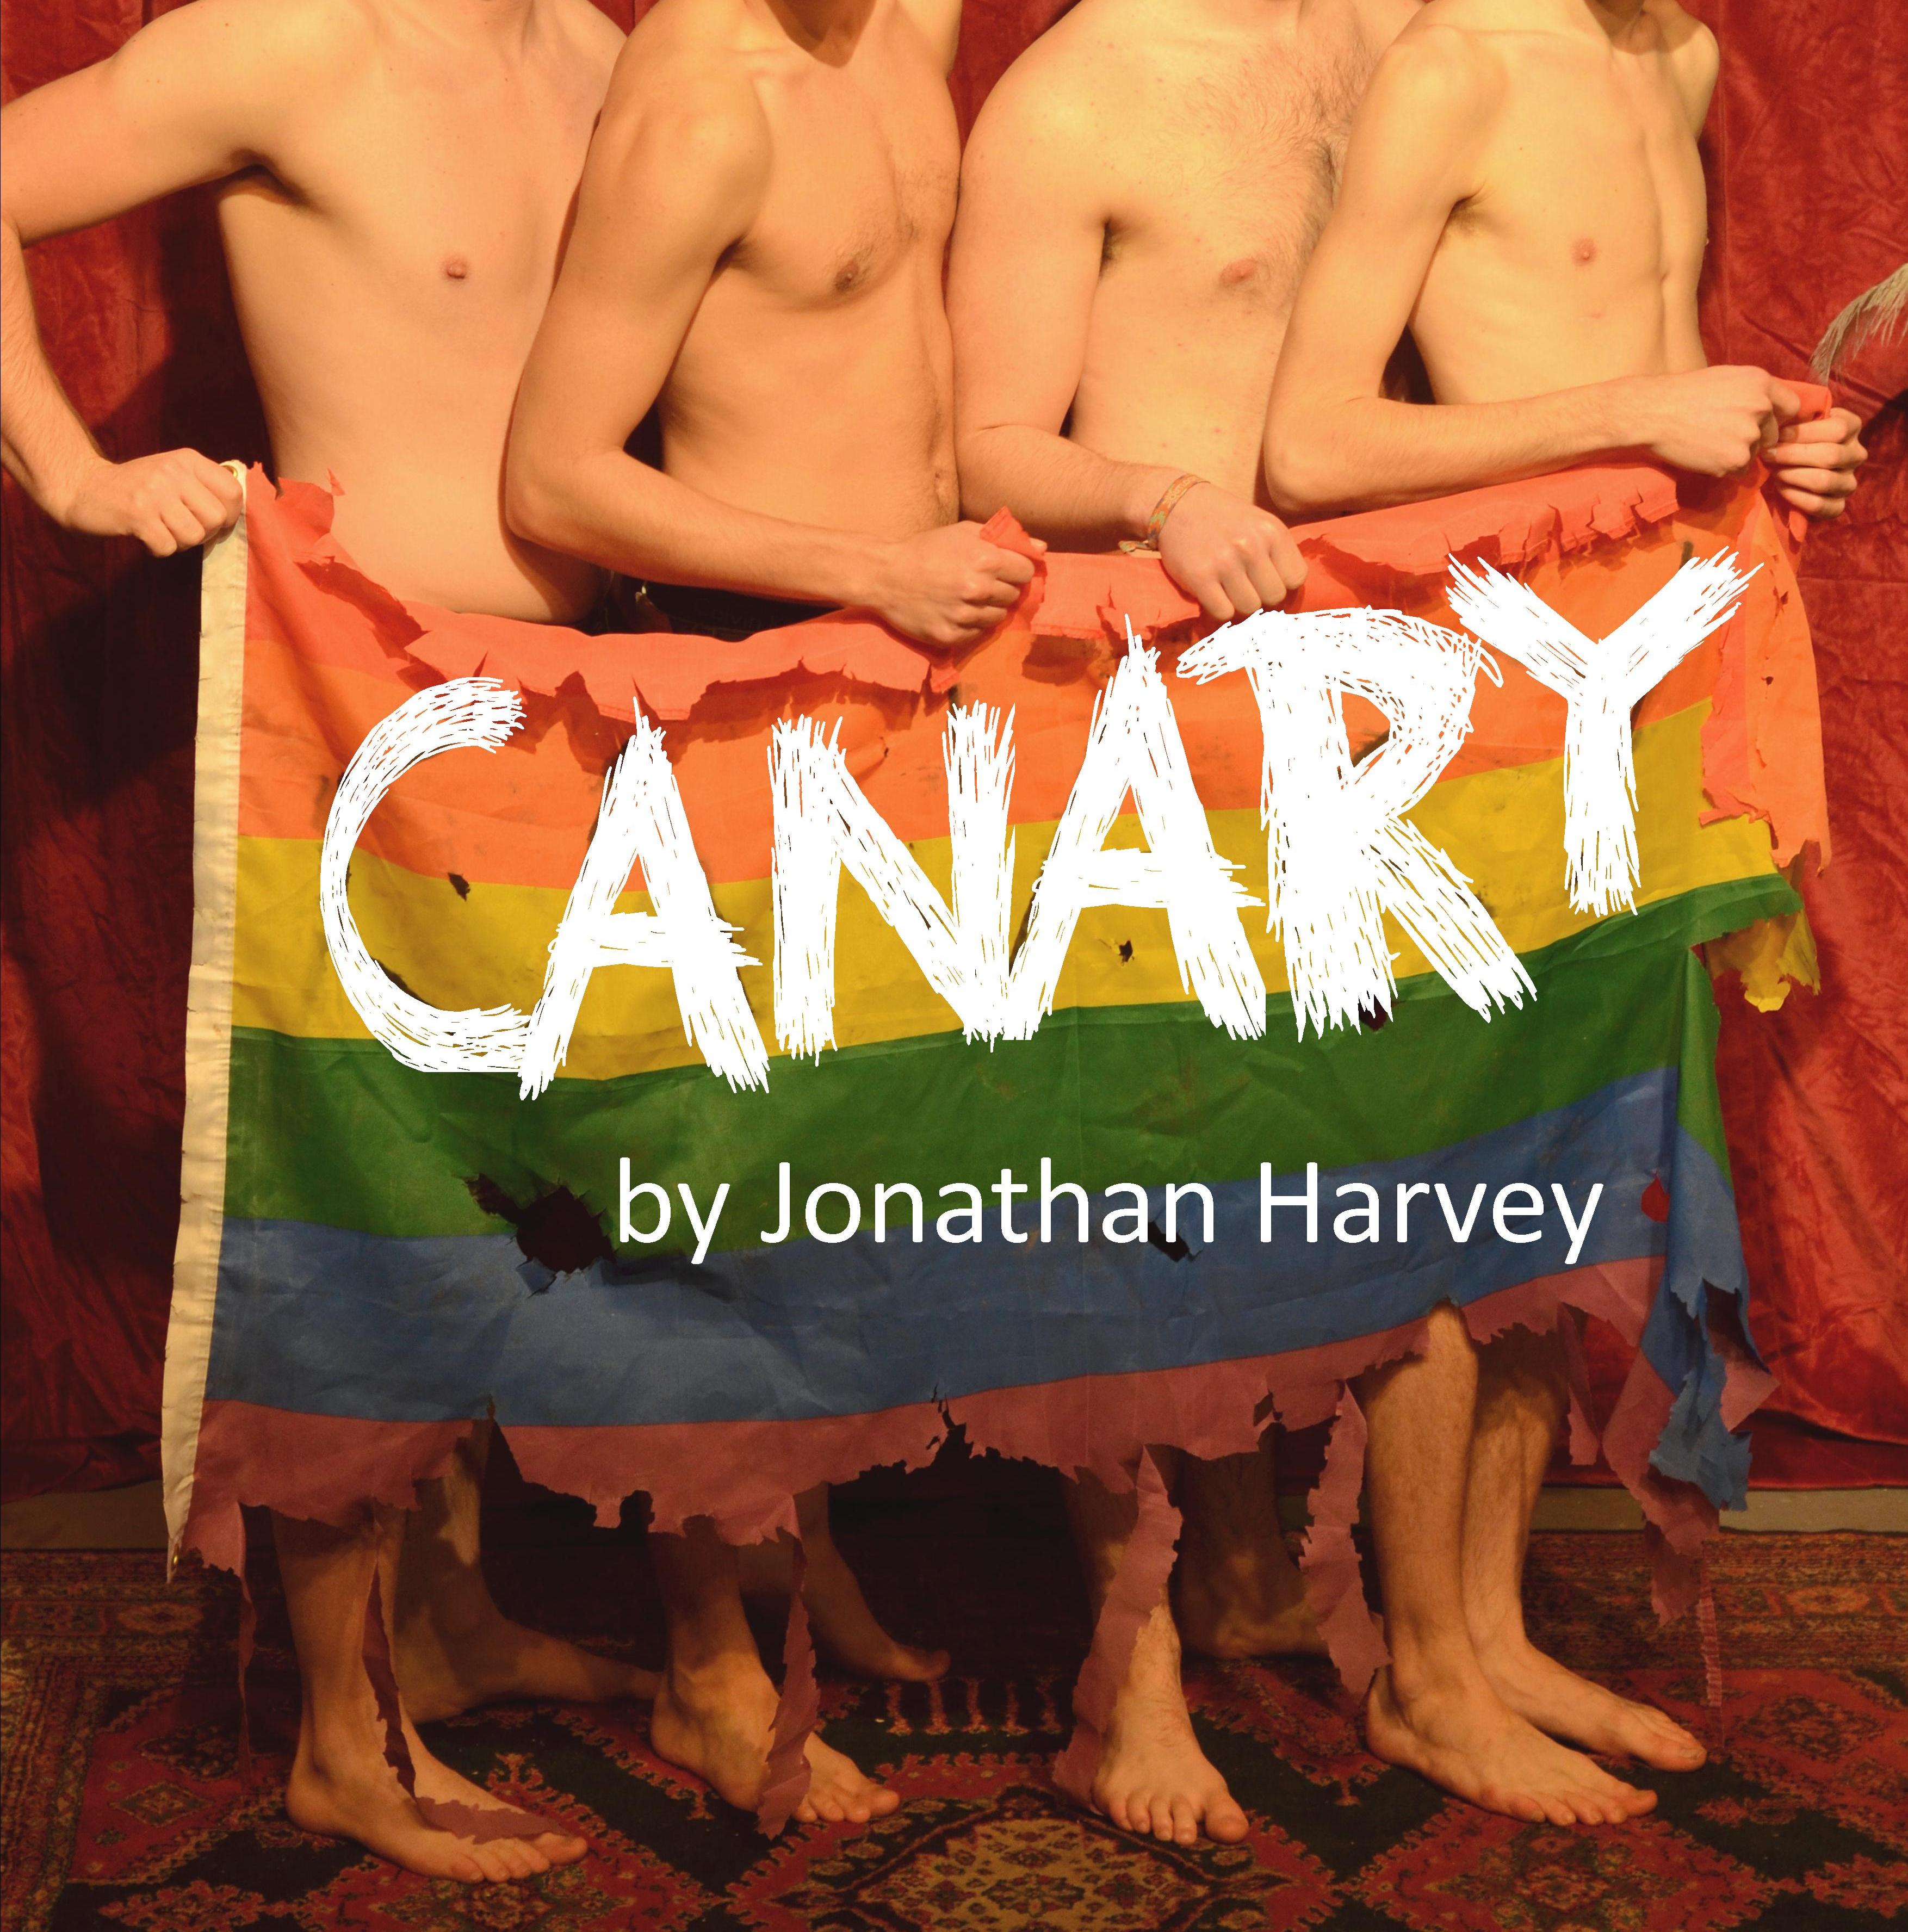 Canary: Brighton Little Theatre: Theatre Review